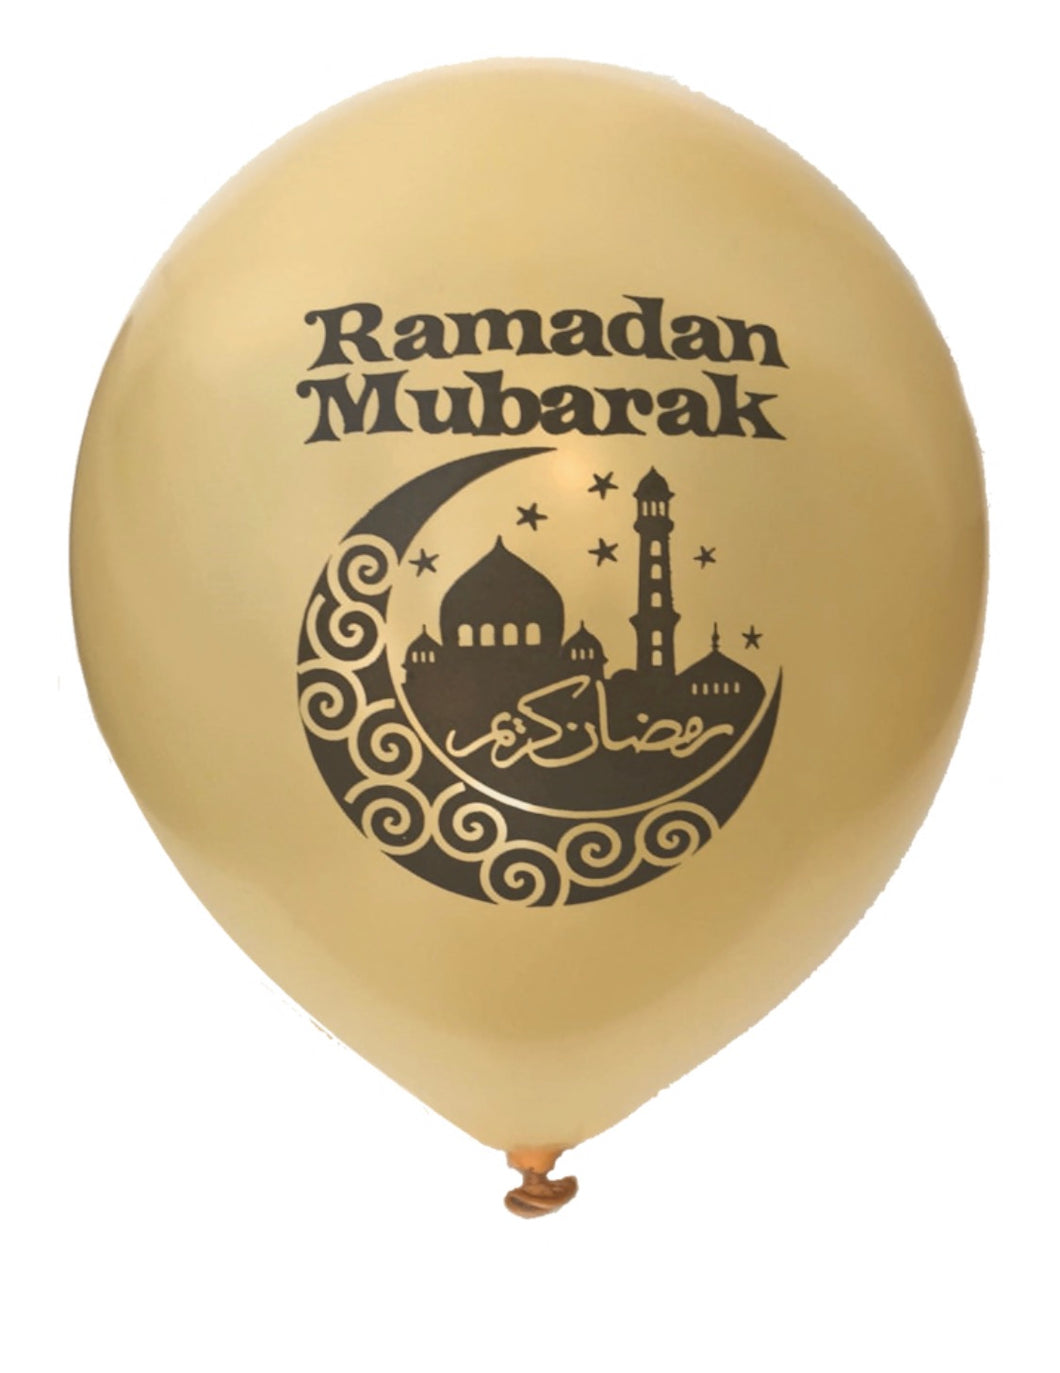 Ramadan Mubarak Balloons in English & Arabic (Set of 12)